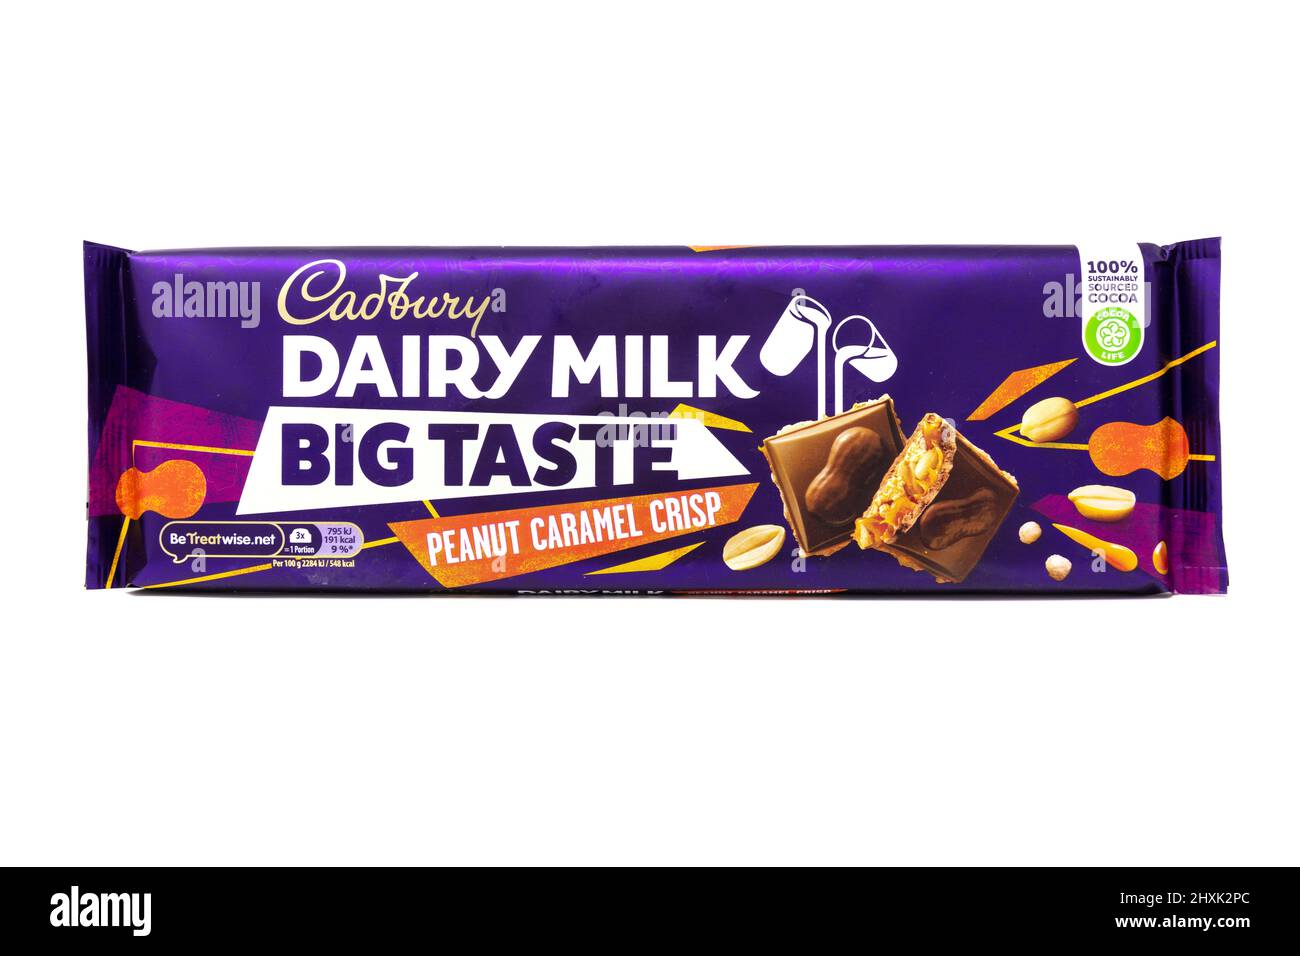 Cadbury Dairy Milk Big Taste Peanut Caramel Crisp Chocolate Bar Stock Photo